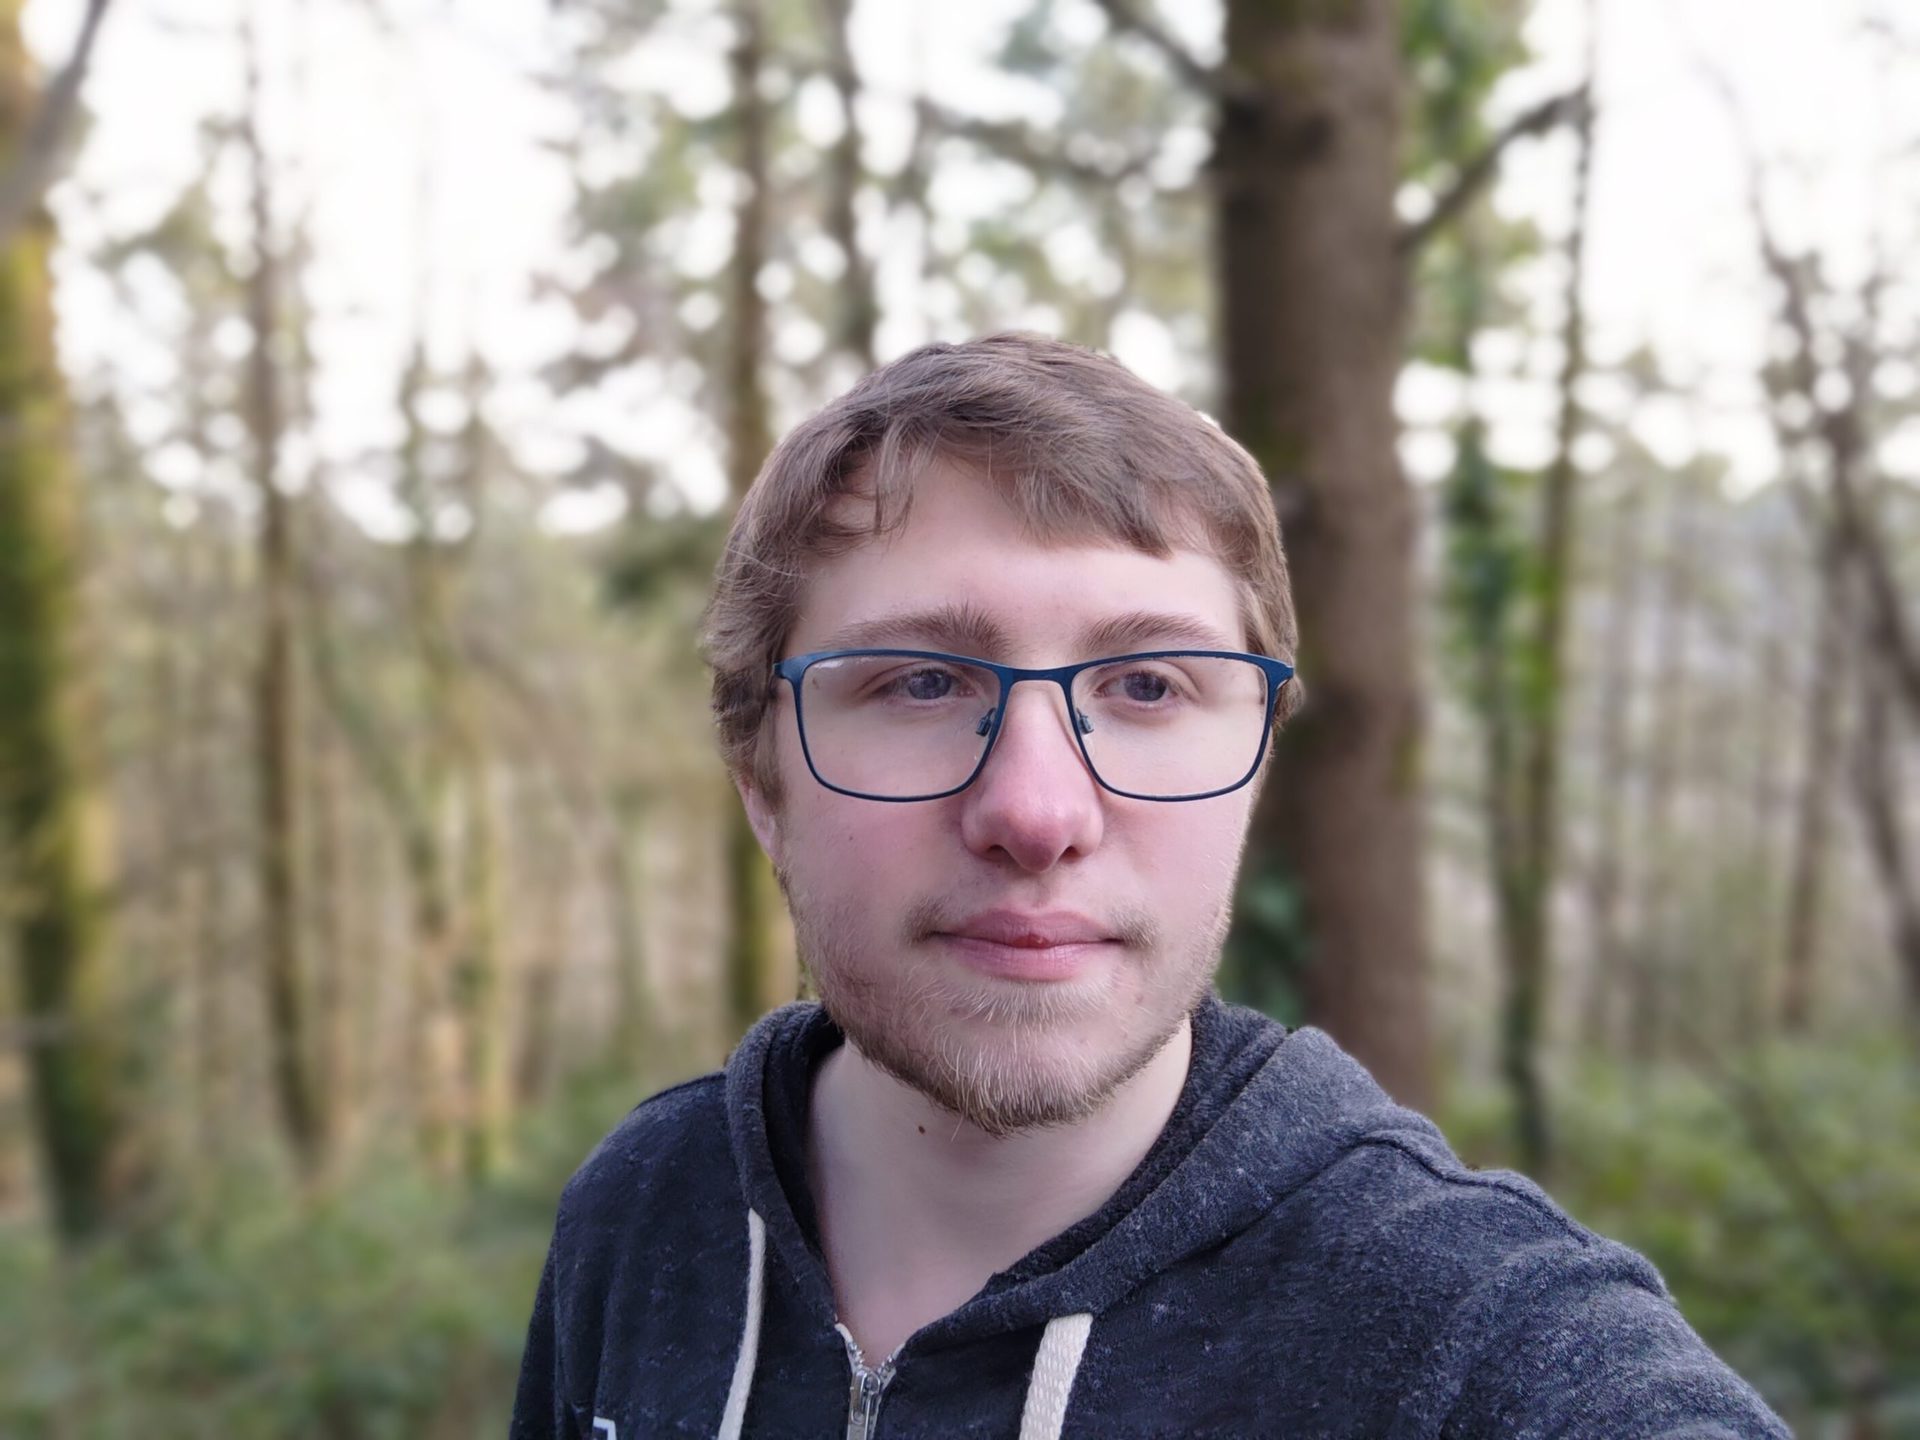 ROG Phone 5 portrait selfie camera sample in a forest